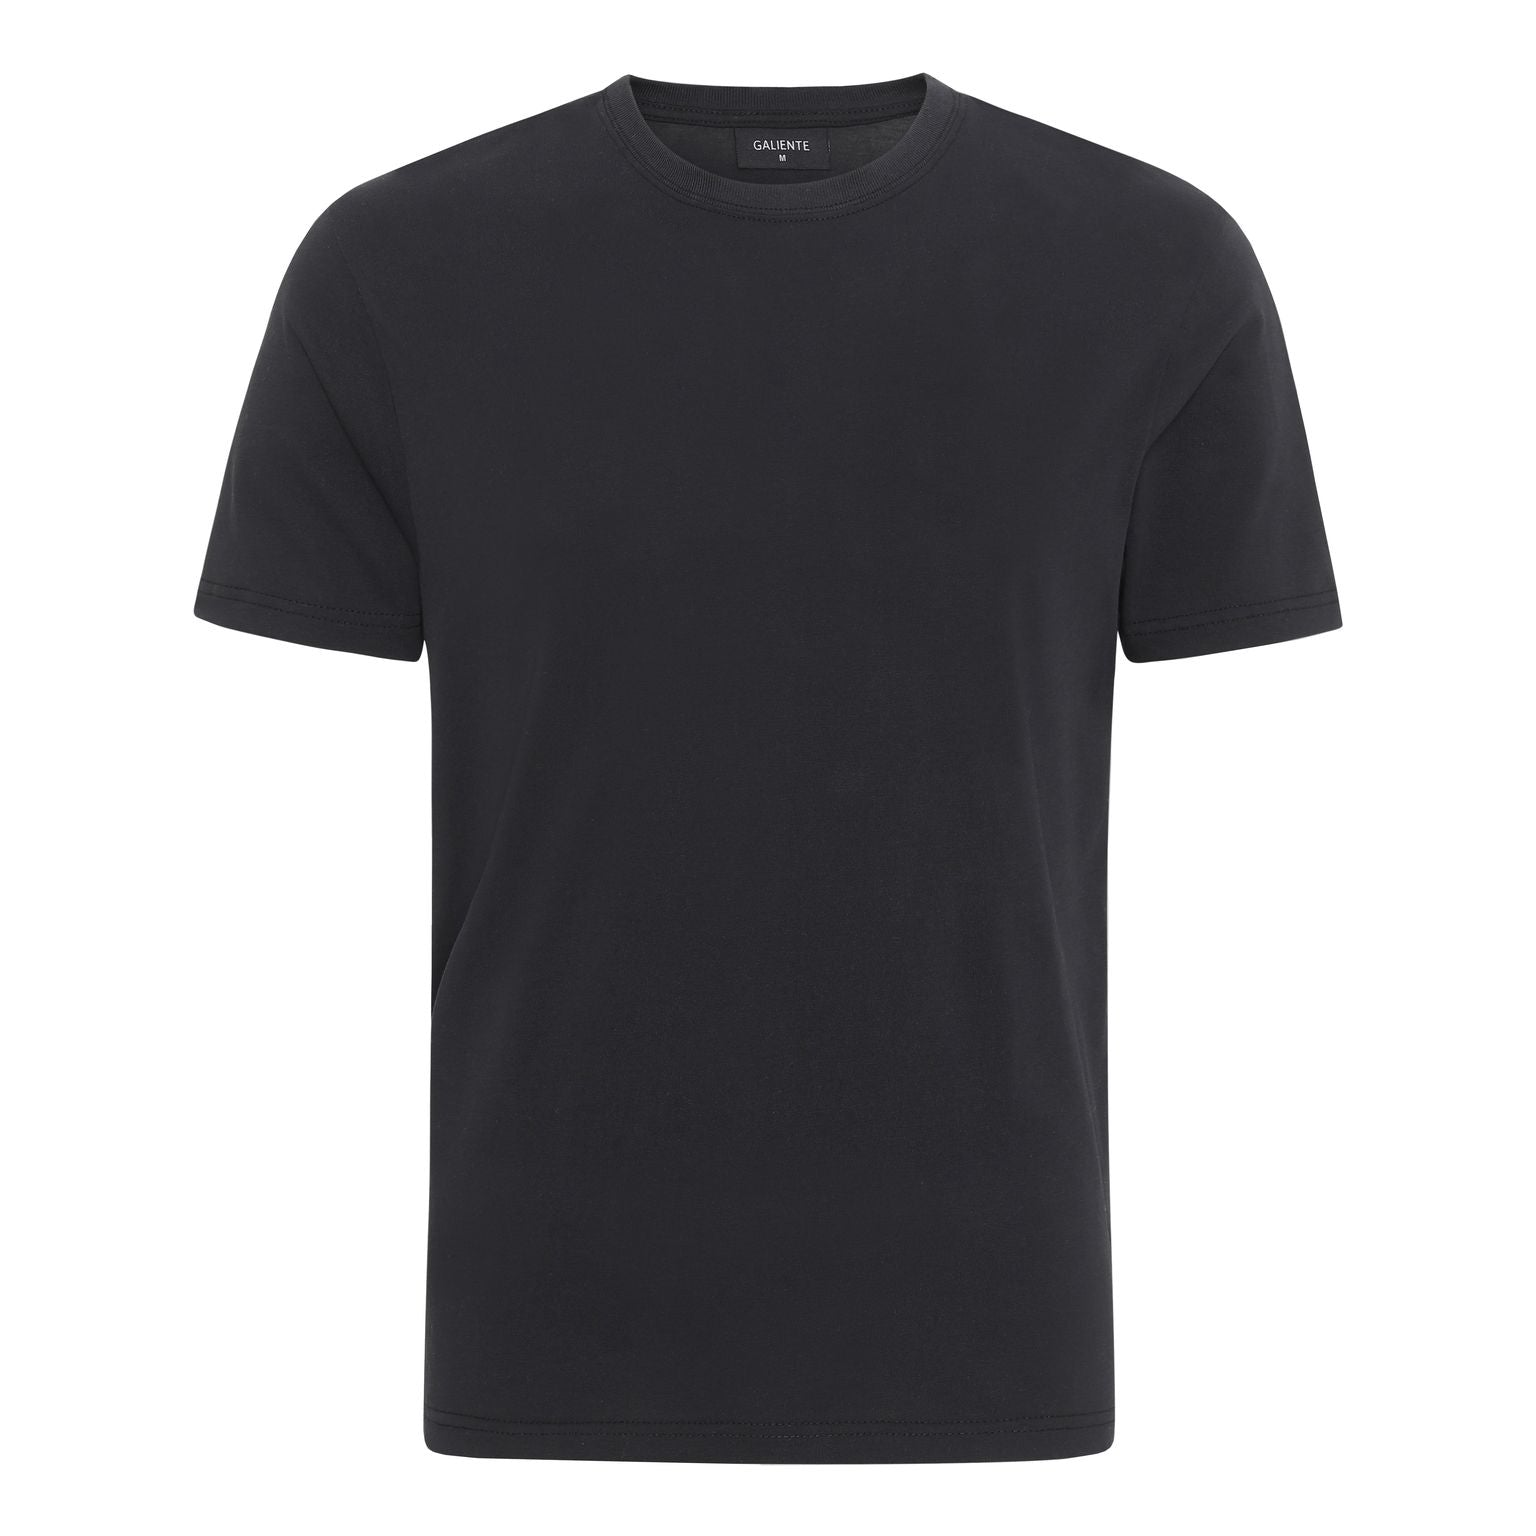 Black T-shirt with blue print